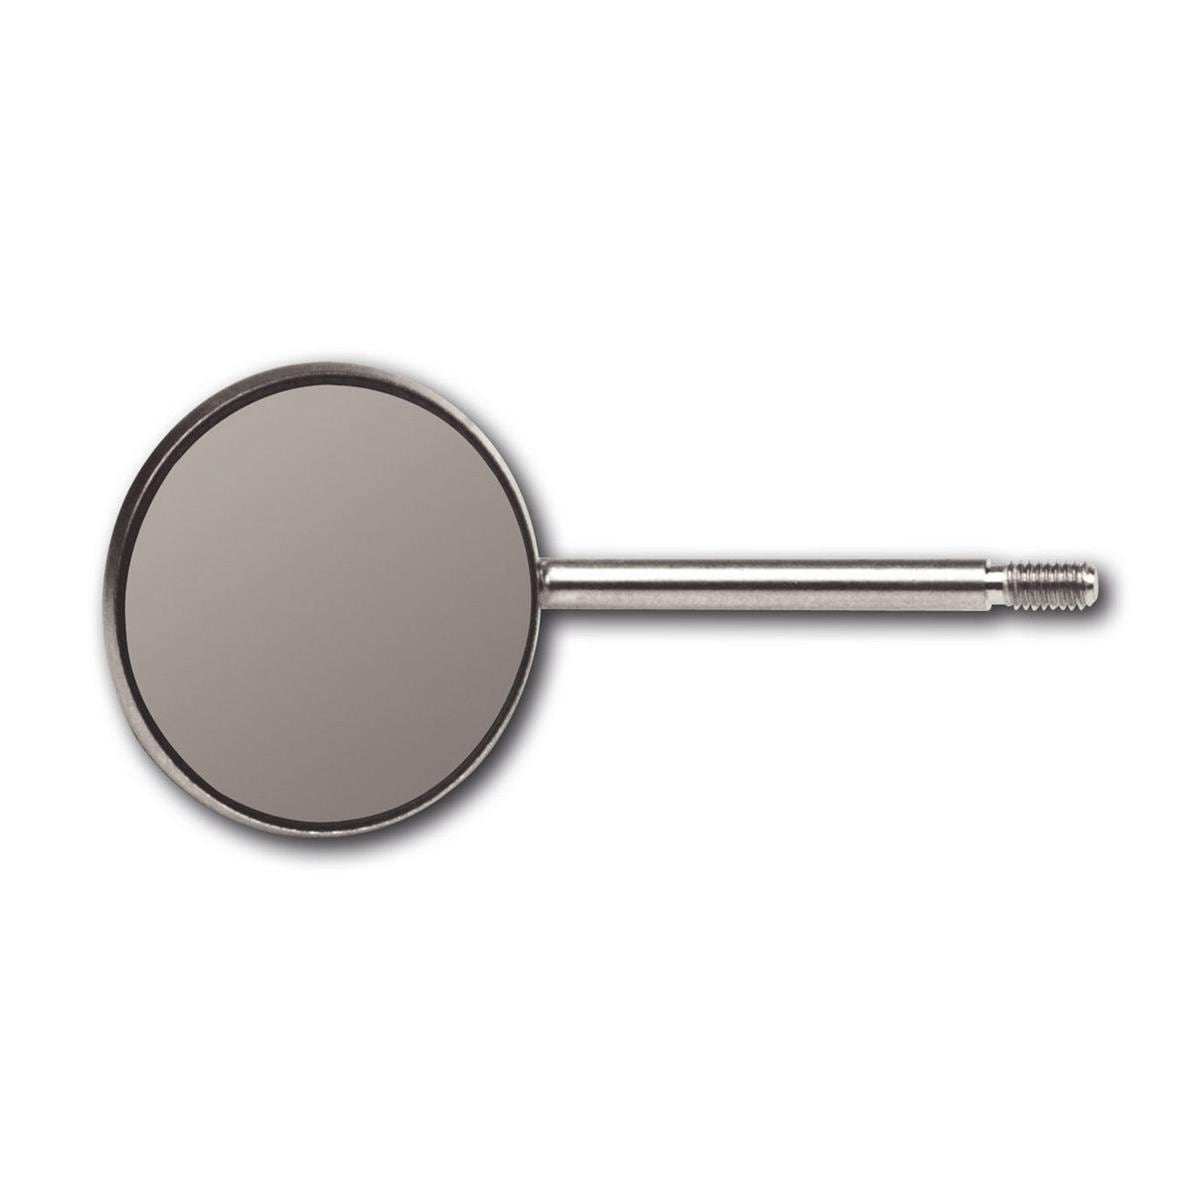 Acteon Mondspiegel aluminium - REF. MP3120PH, Size 3 (20 mm), 12 stuks